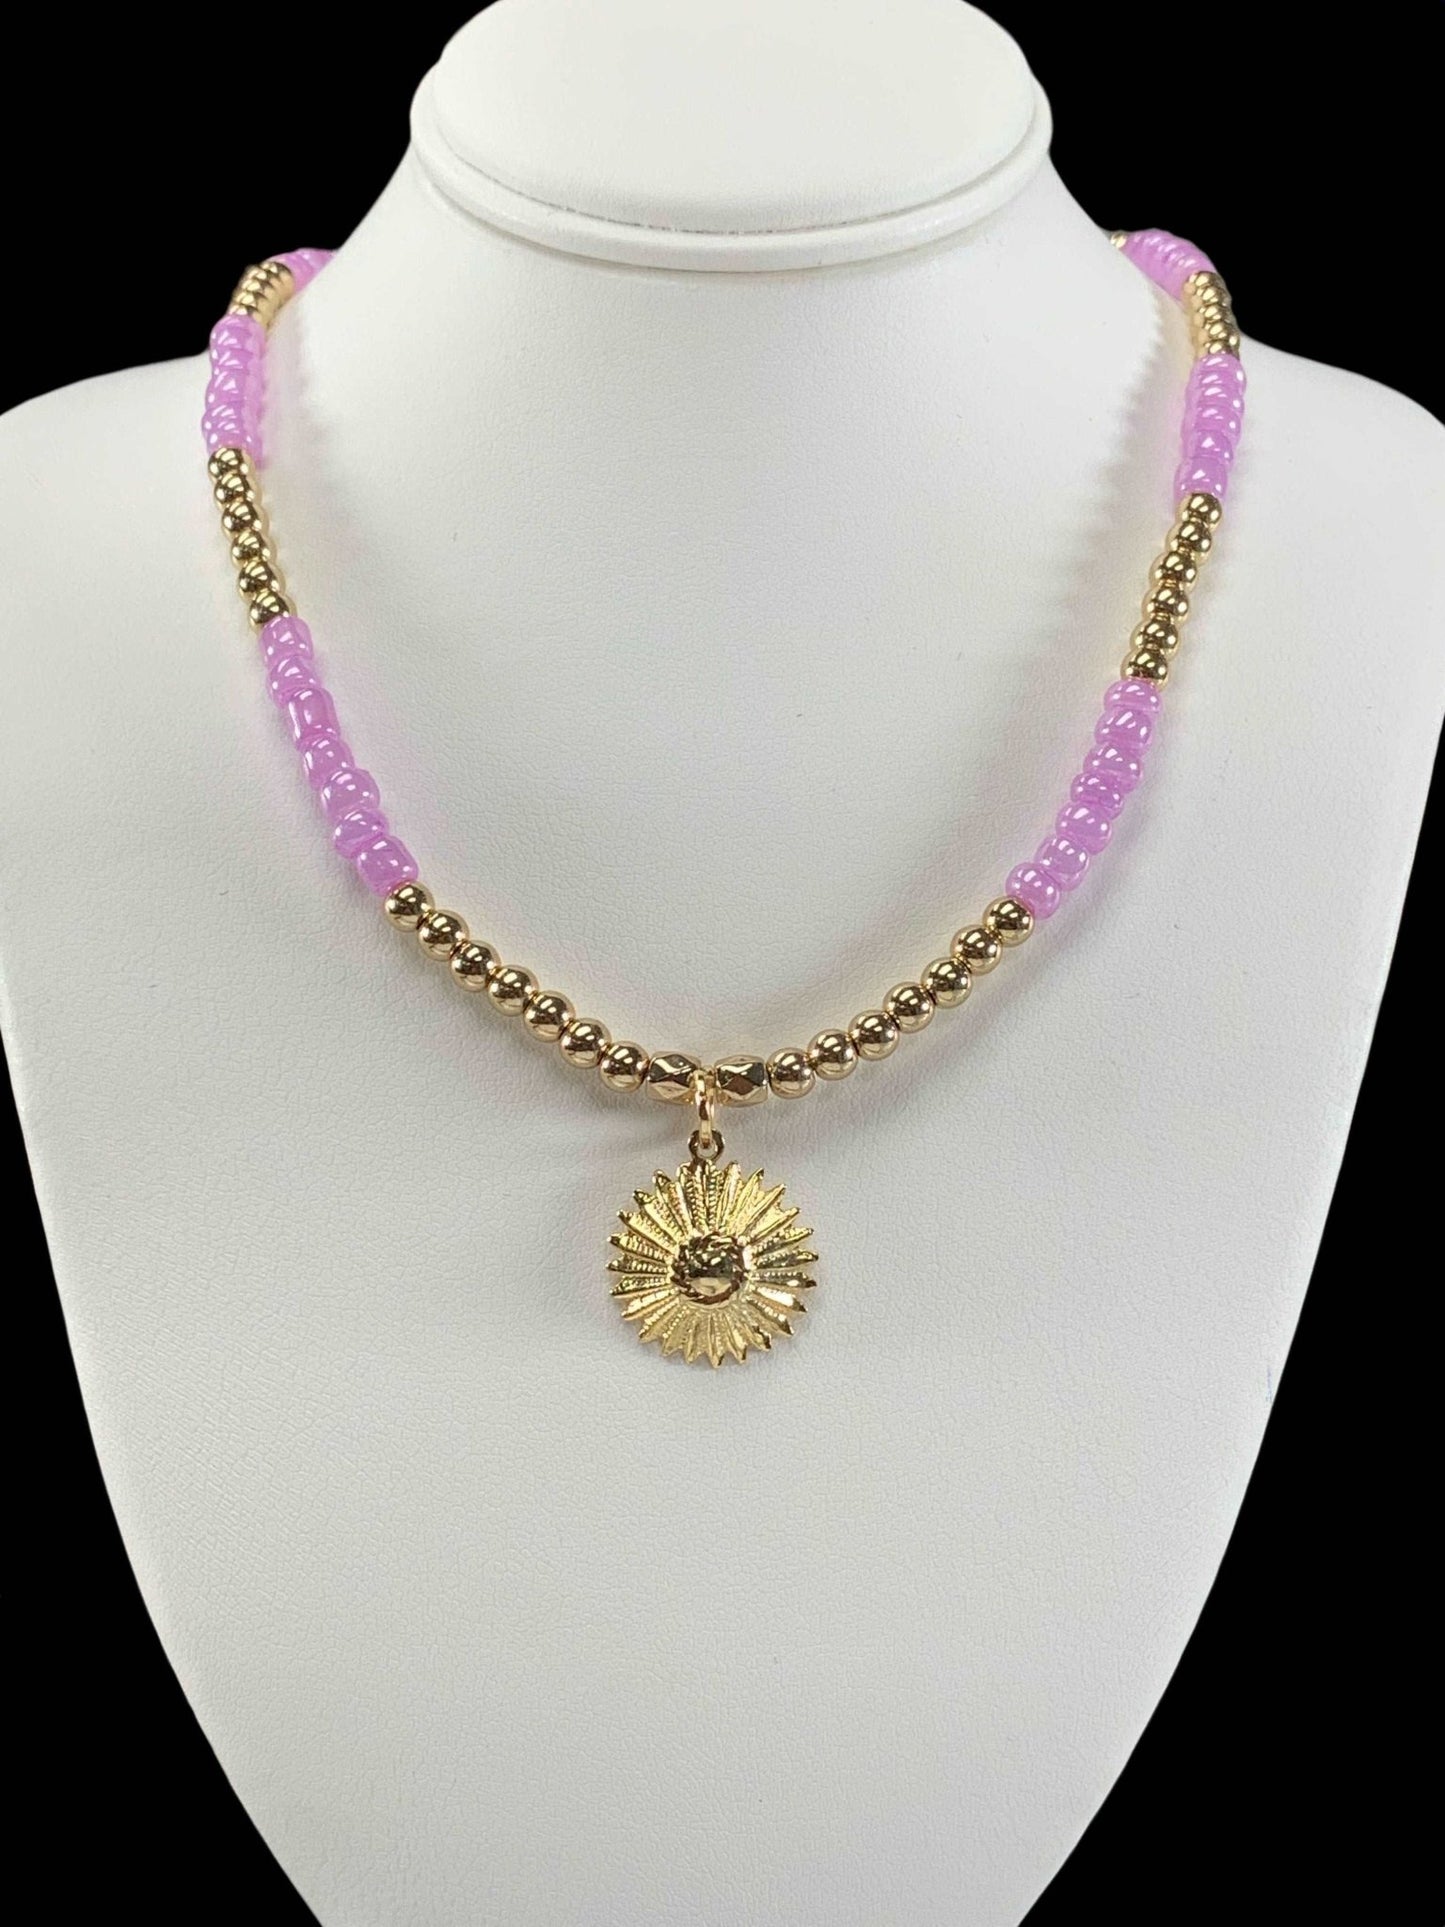 Alba Handmade Expandable Beaded Necklace with a Sun Pendant - Born Mystics